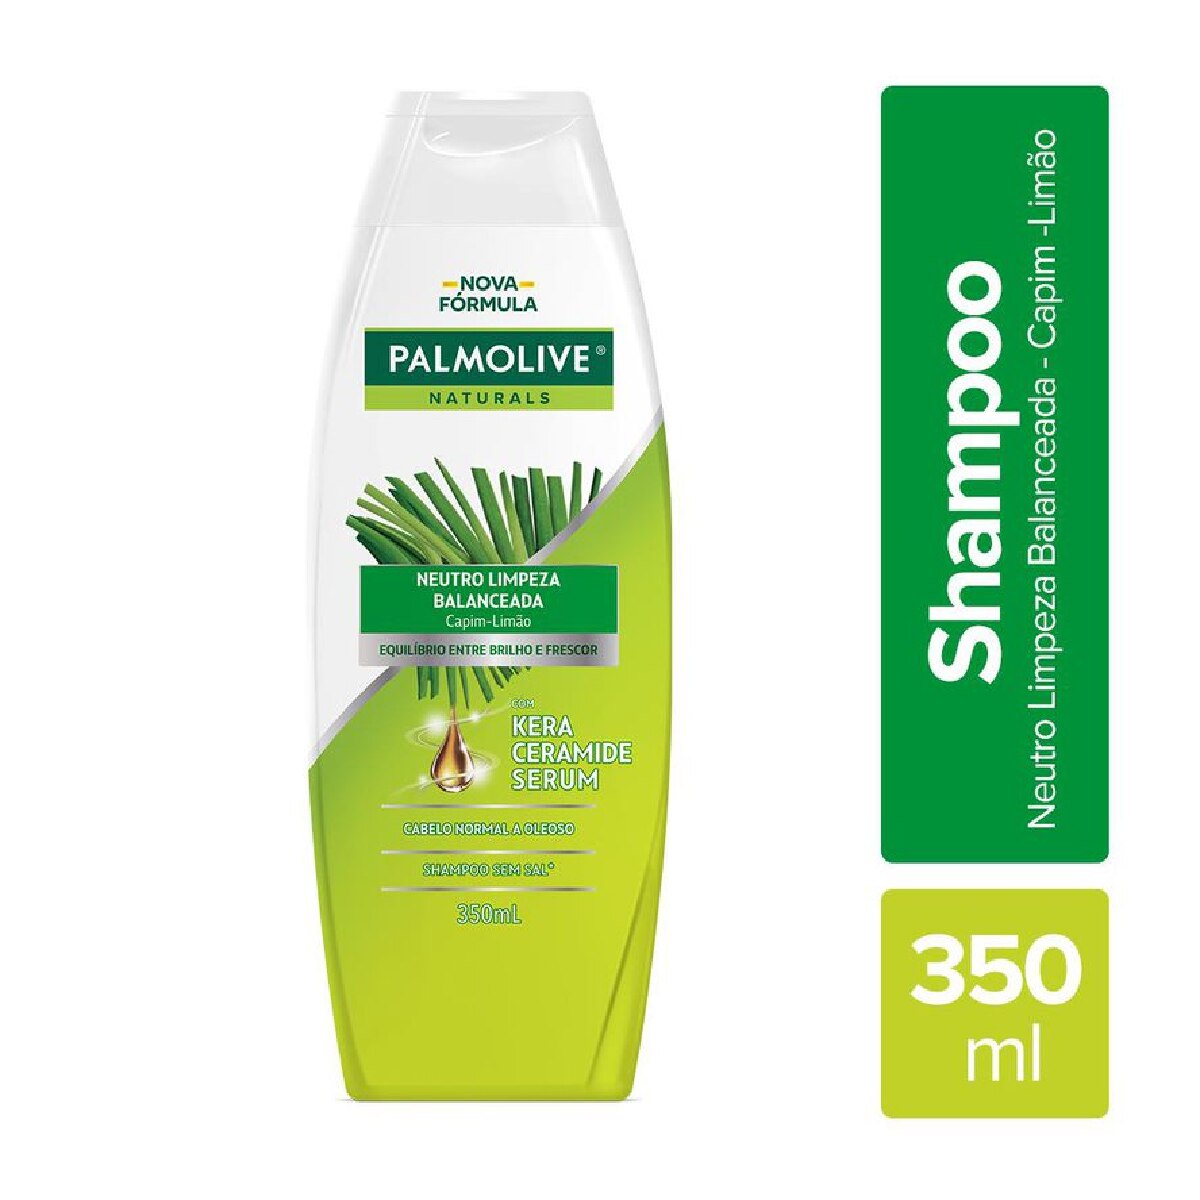 Shampoo Palmolive Naturals Neutro Limpeza Balanceada 350ml